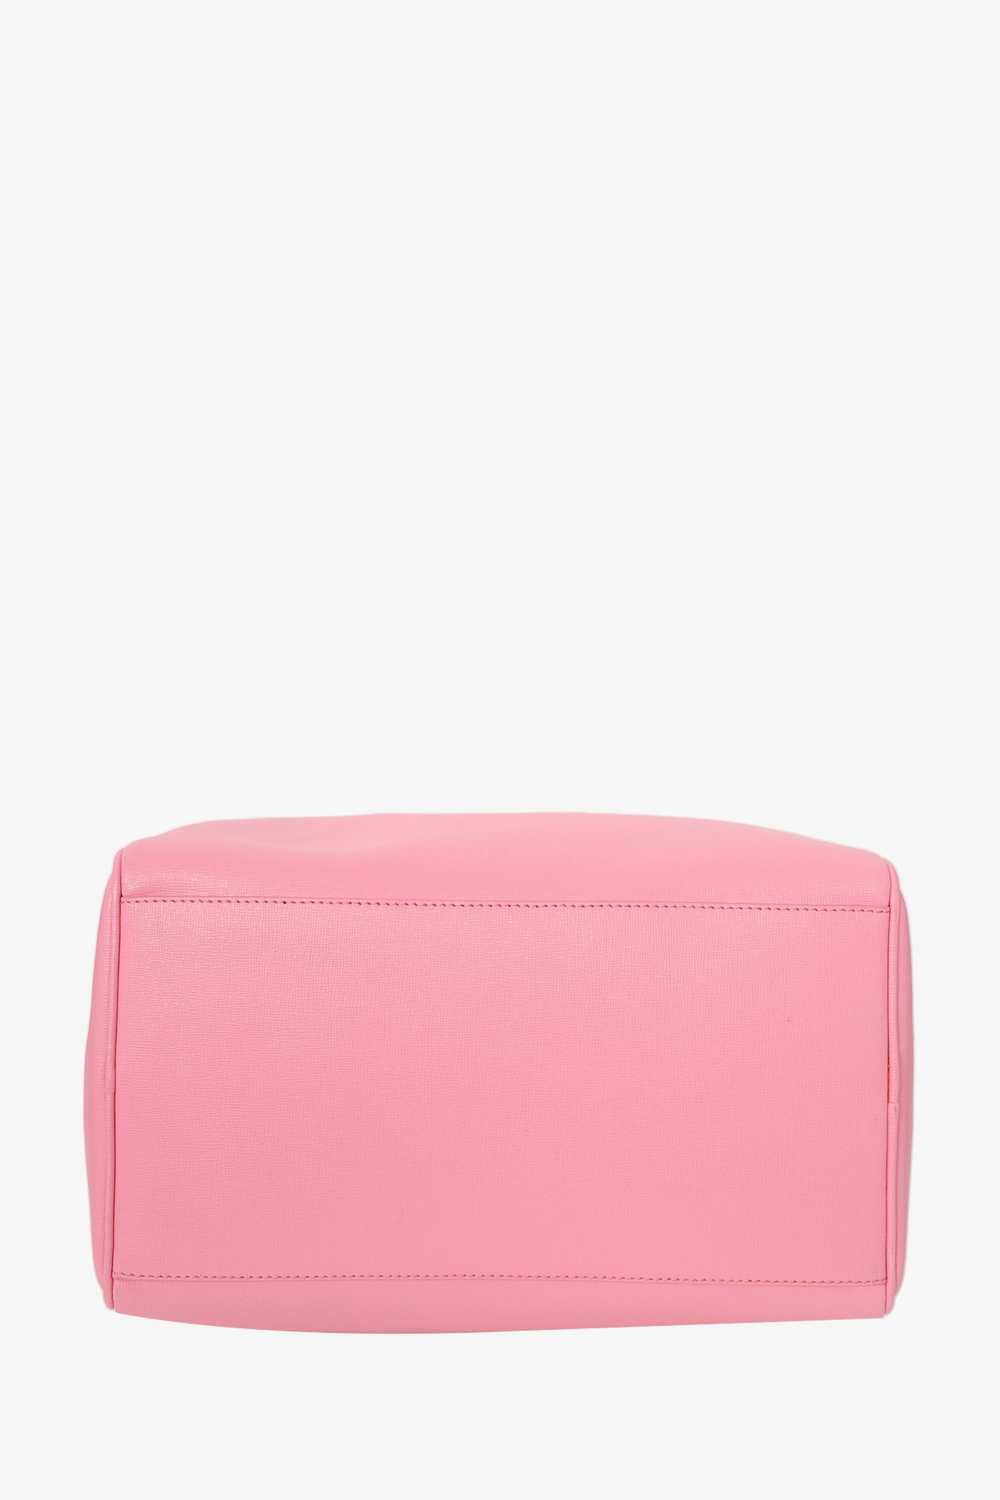 Versace Pink Saffiano Leather Palazzo Medusa Bost… - image 5